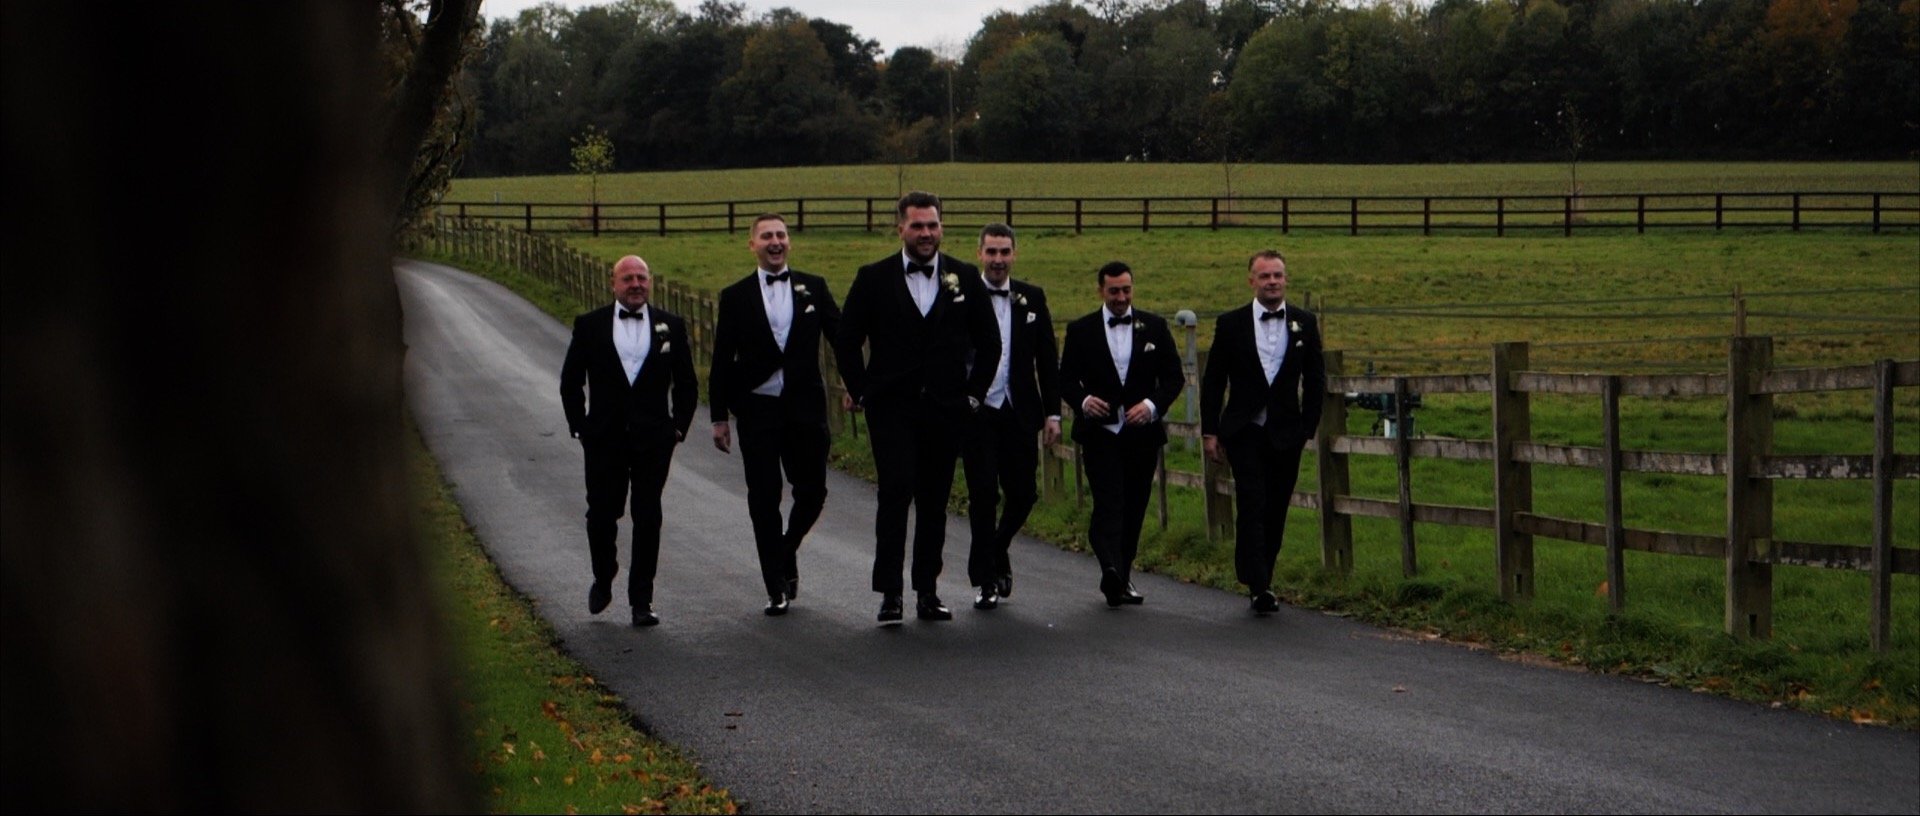 The Groomsmen of Quendon Hall video.jpg